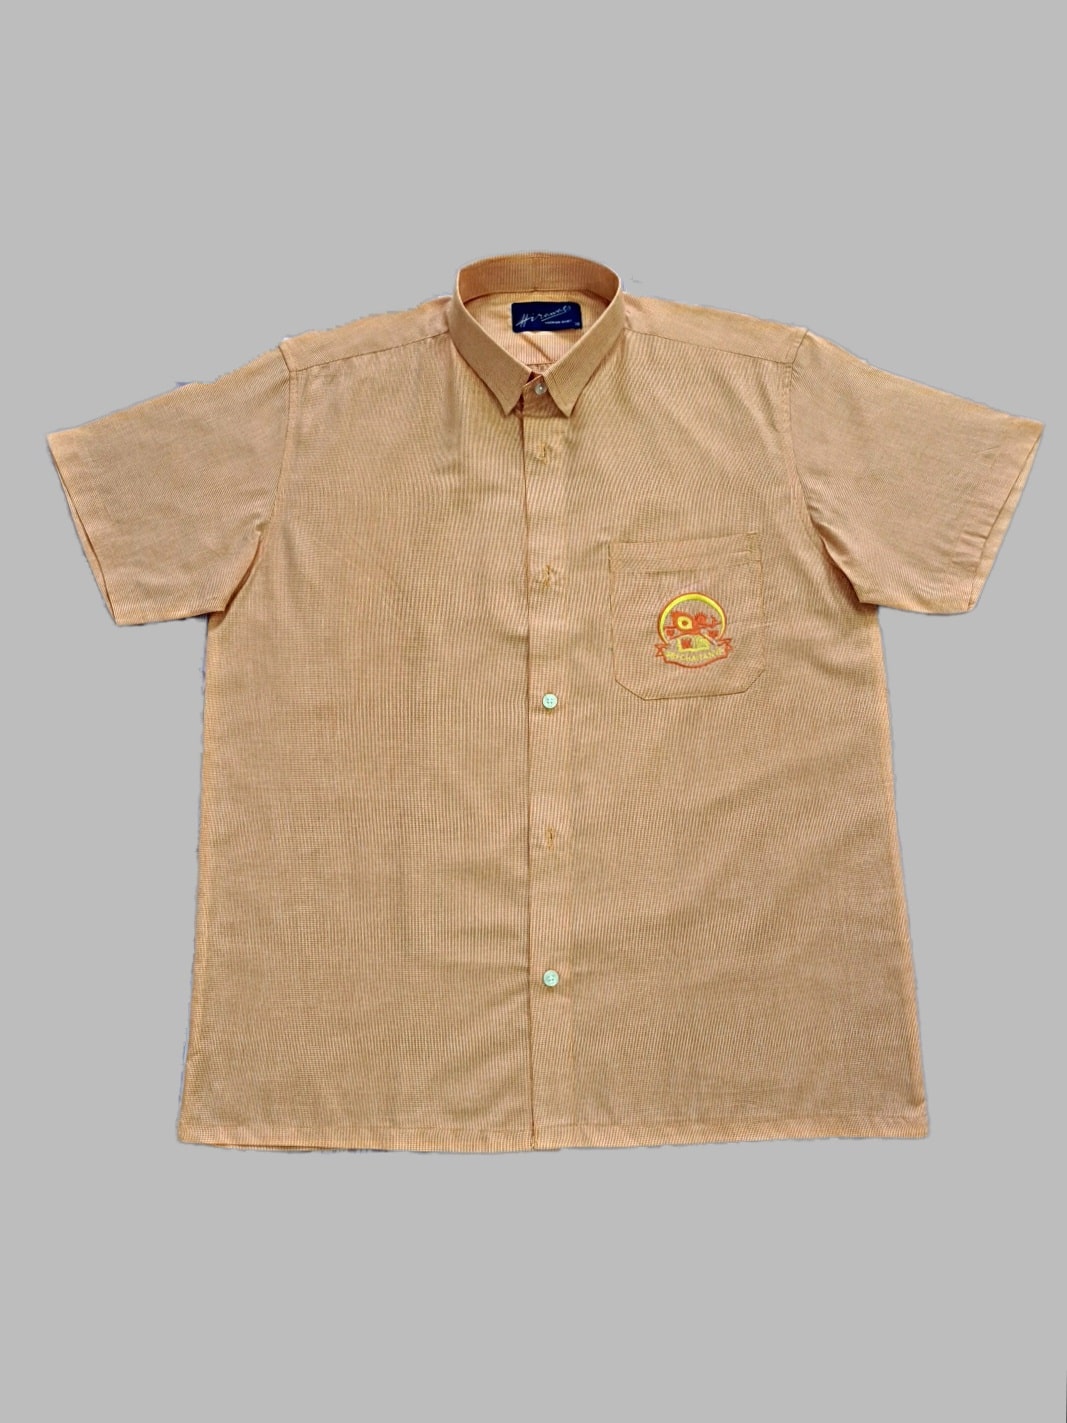 Chaitanya Junior College Boy Shirt